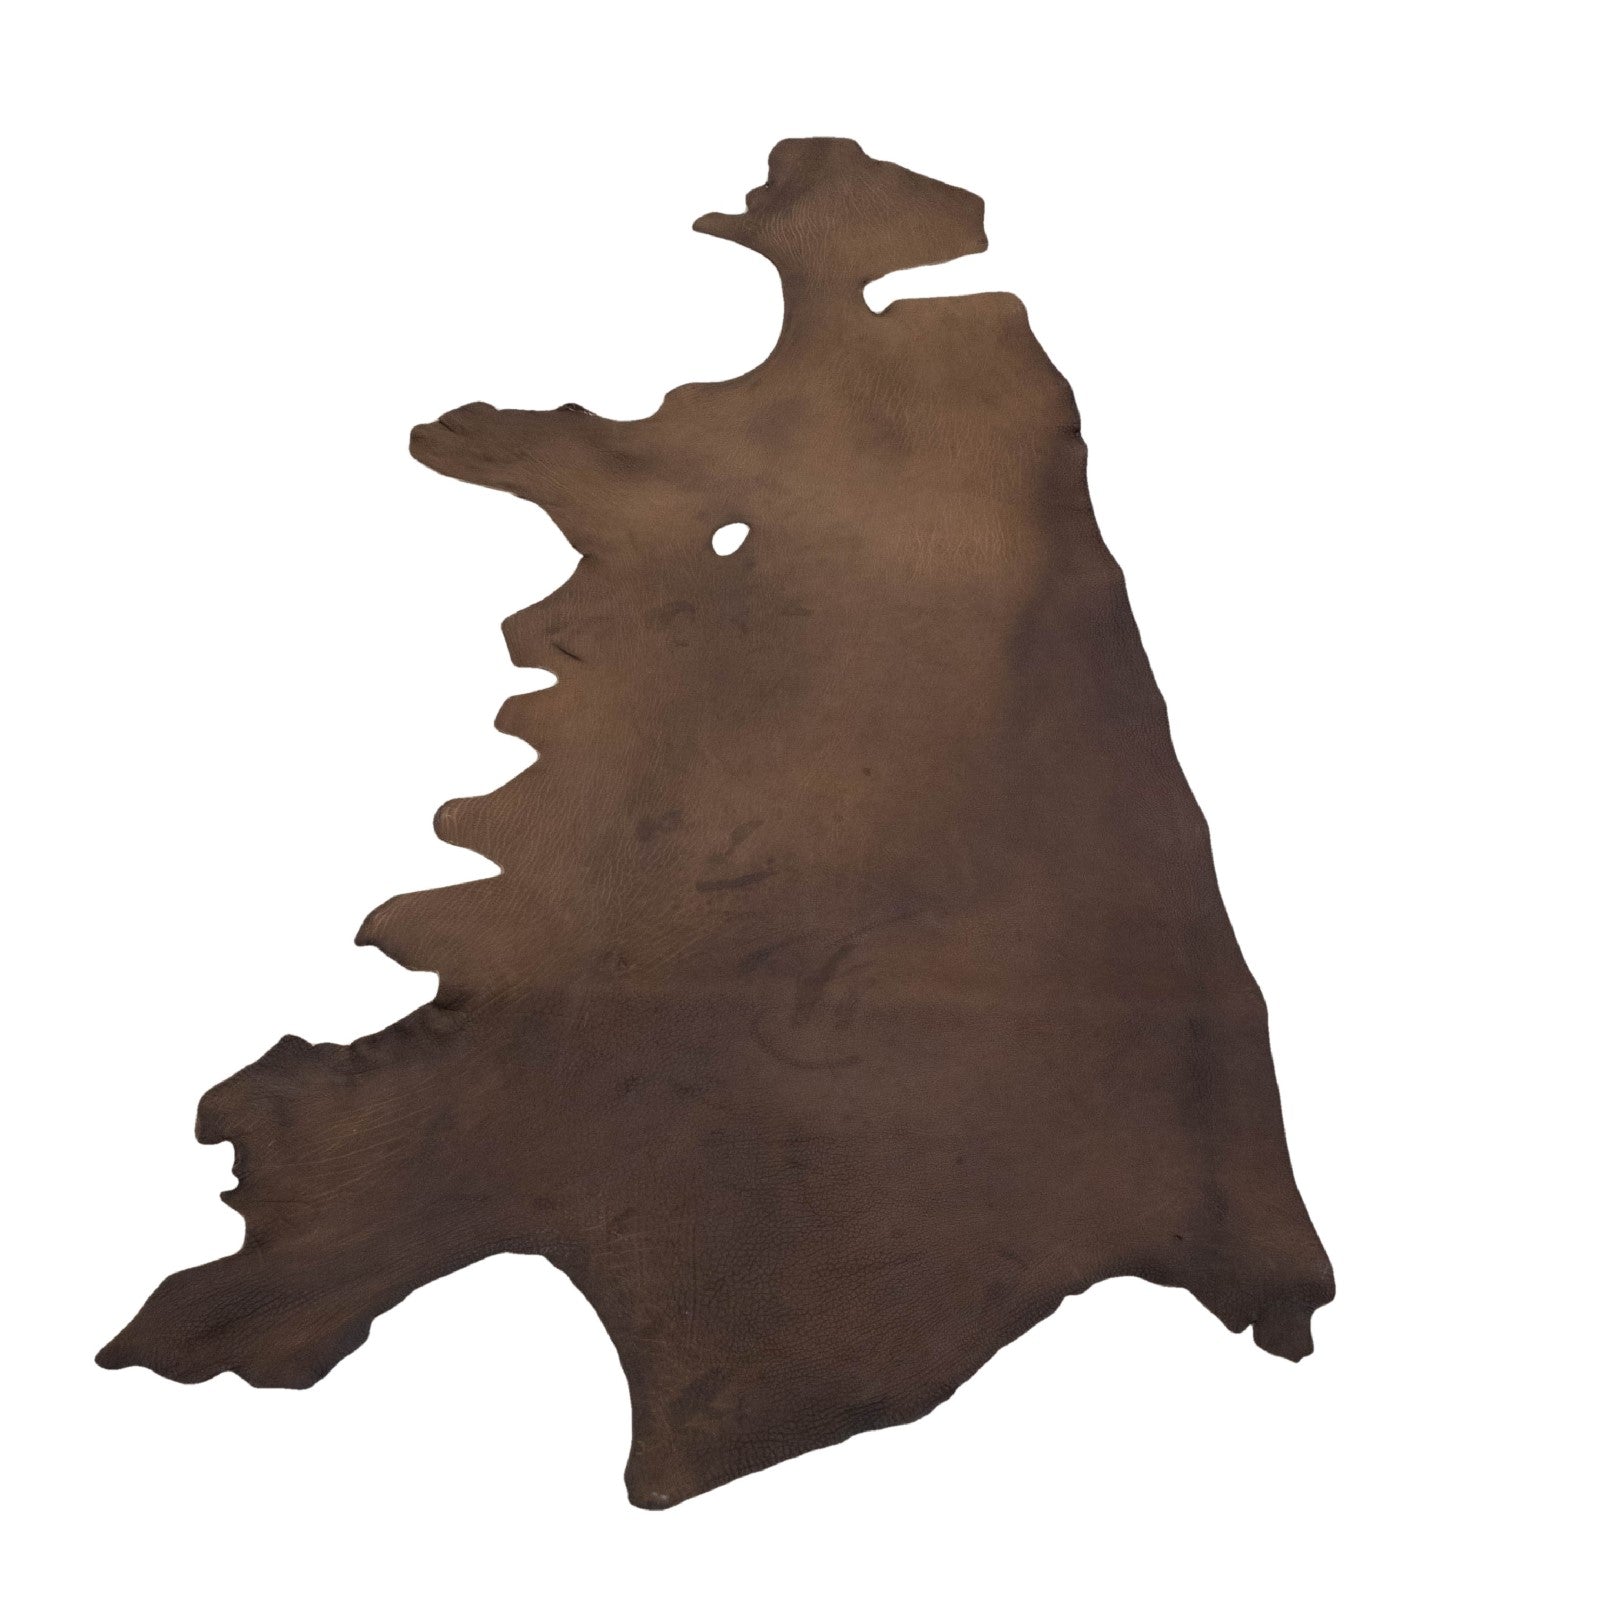 Burnt Bark Brown, 7.5-8.5 oz, 9-20 Sq Ft, Bison Sides, 12-14 Sq Ft | The Leather Guy